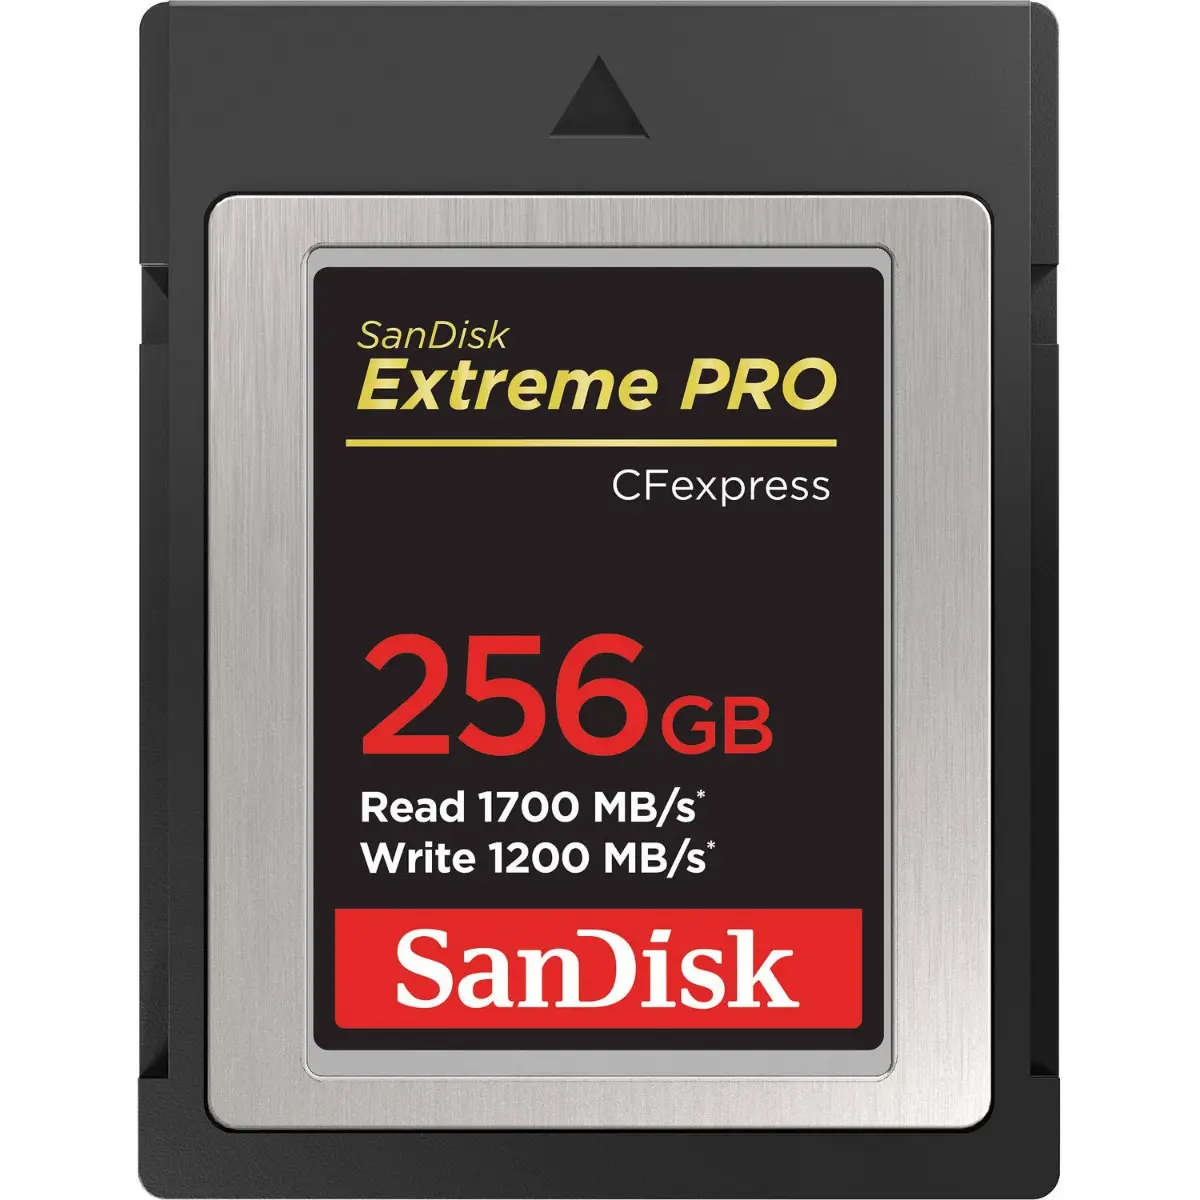 Image of SanDisk Extreme PRO 256GB CFEXPRESS